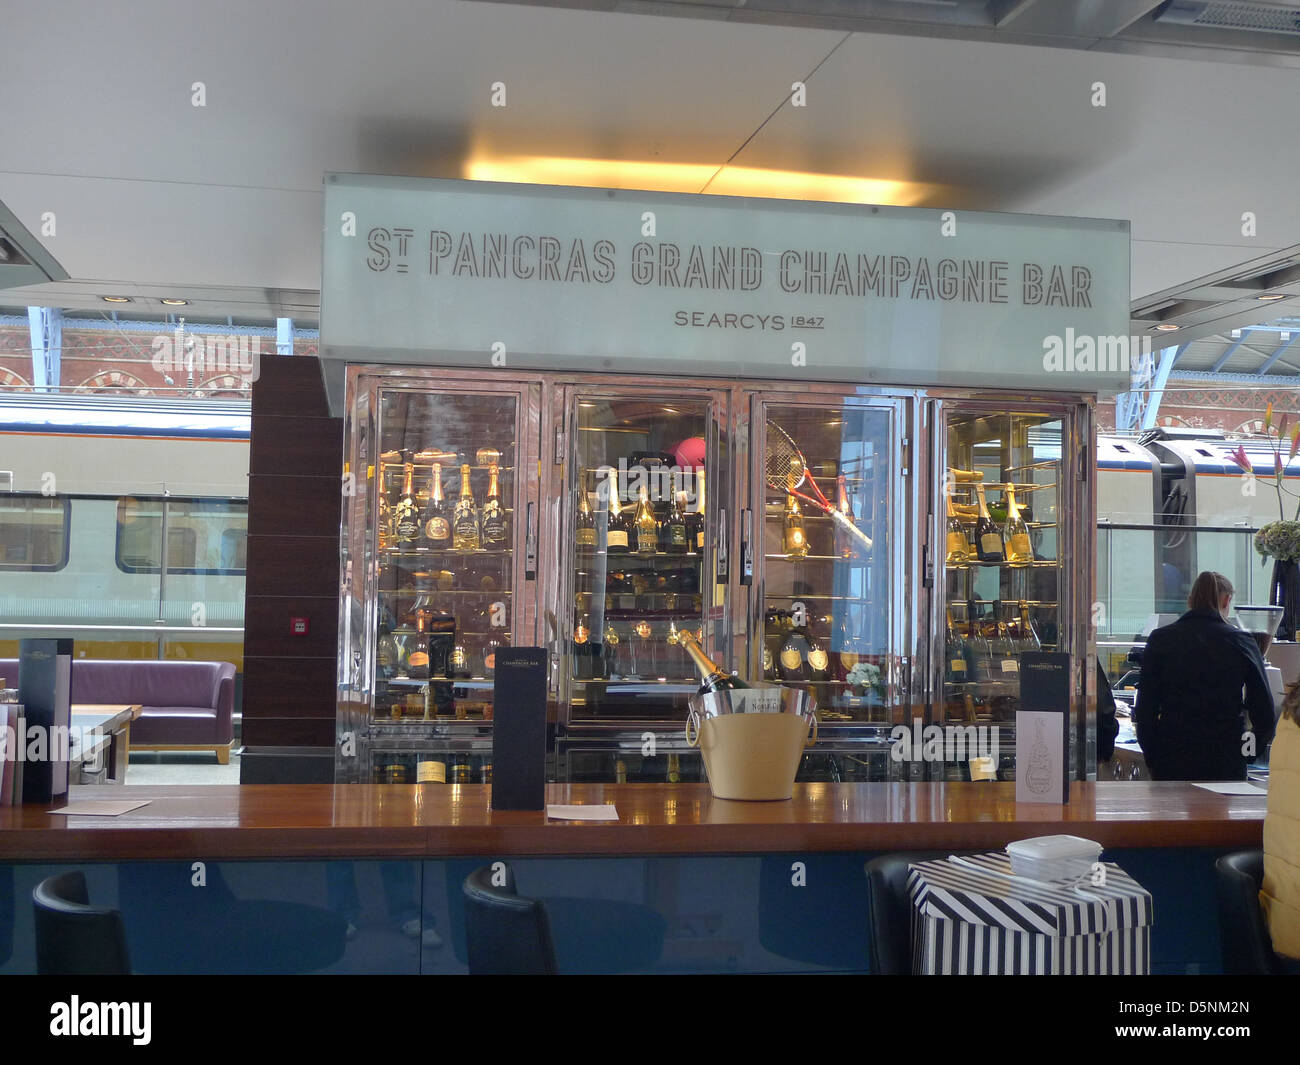 St. Pancras Grand Champagne Bar, St. Pancras International Station, London, UK. Stock Photo